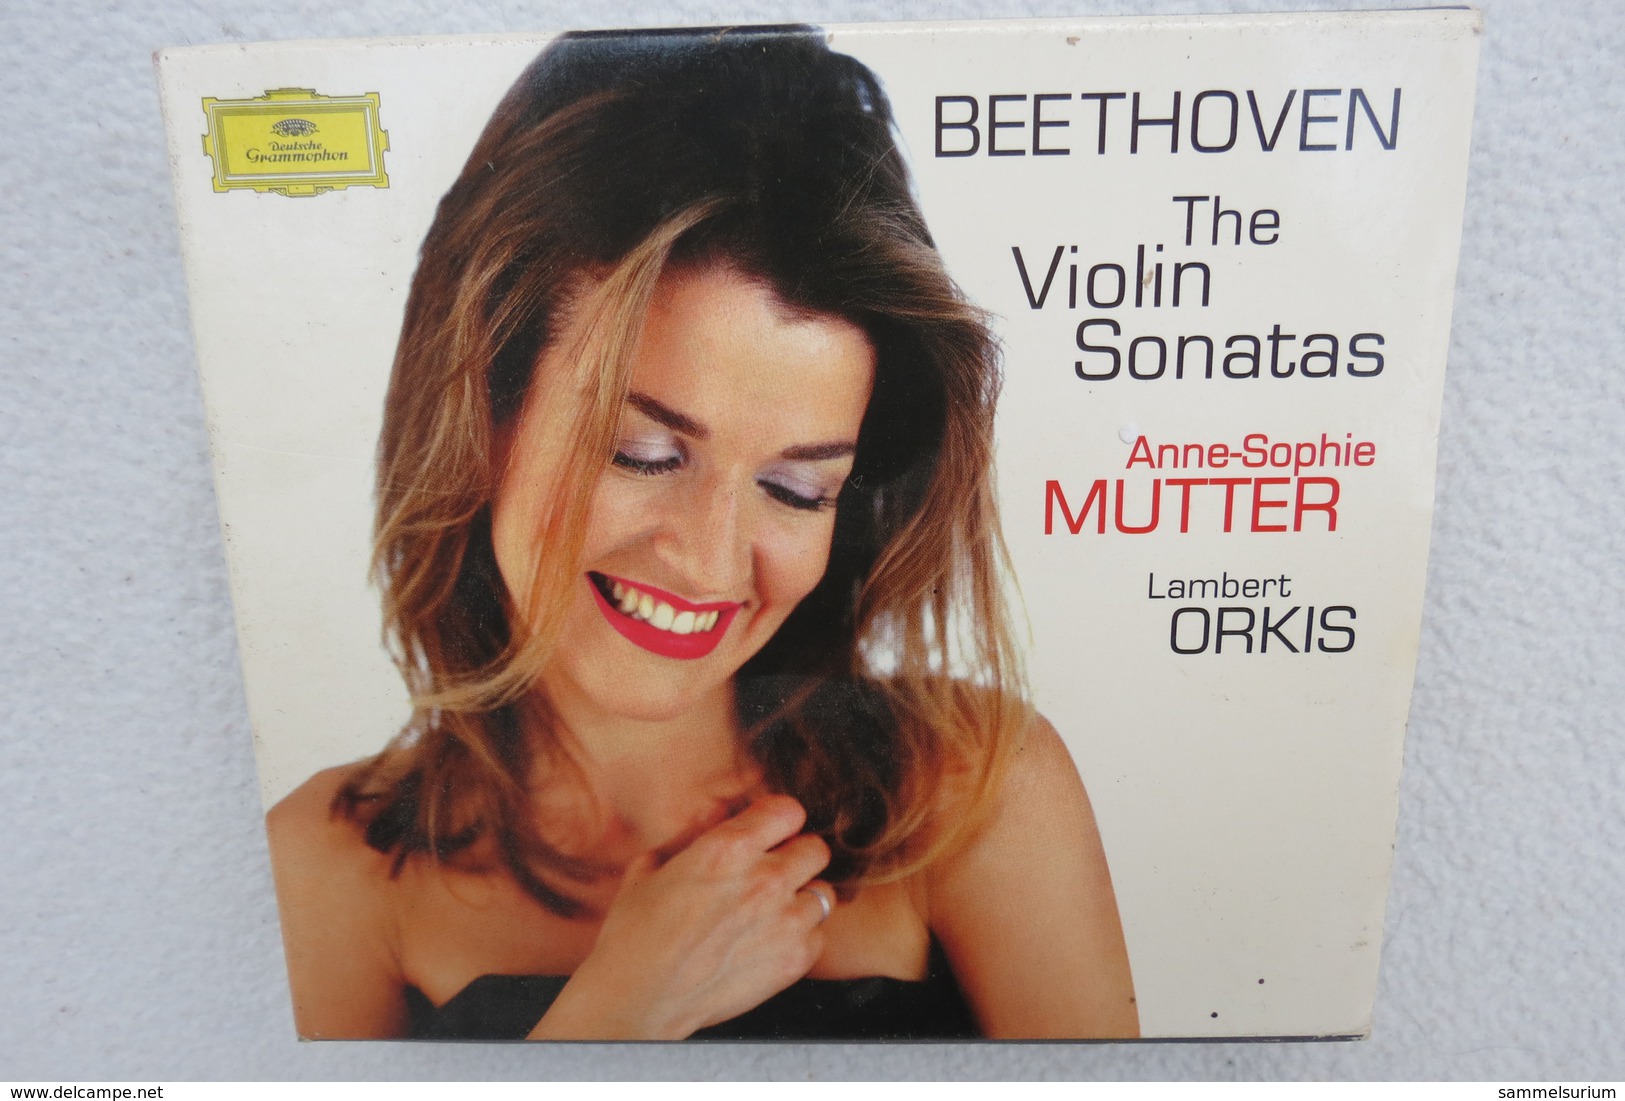 4 CDs "Anne-Sophie Mutter" Beethoven, The Violin Sonatas - Klassik